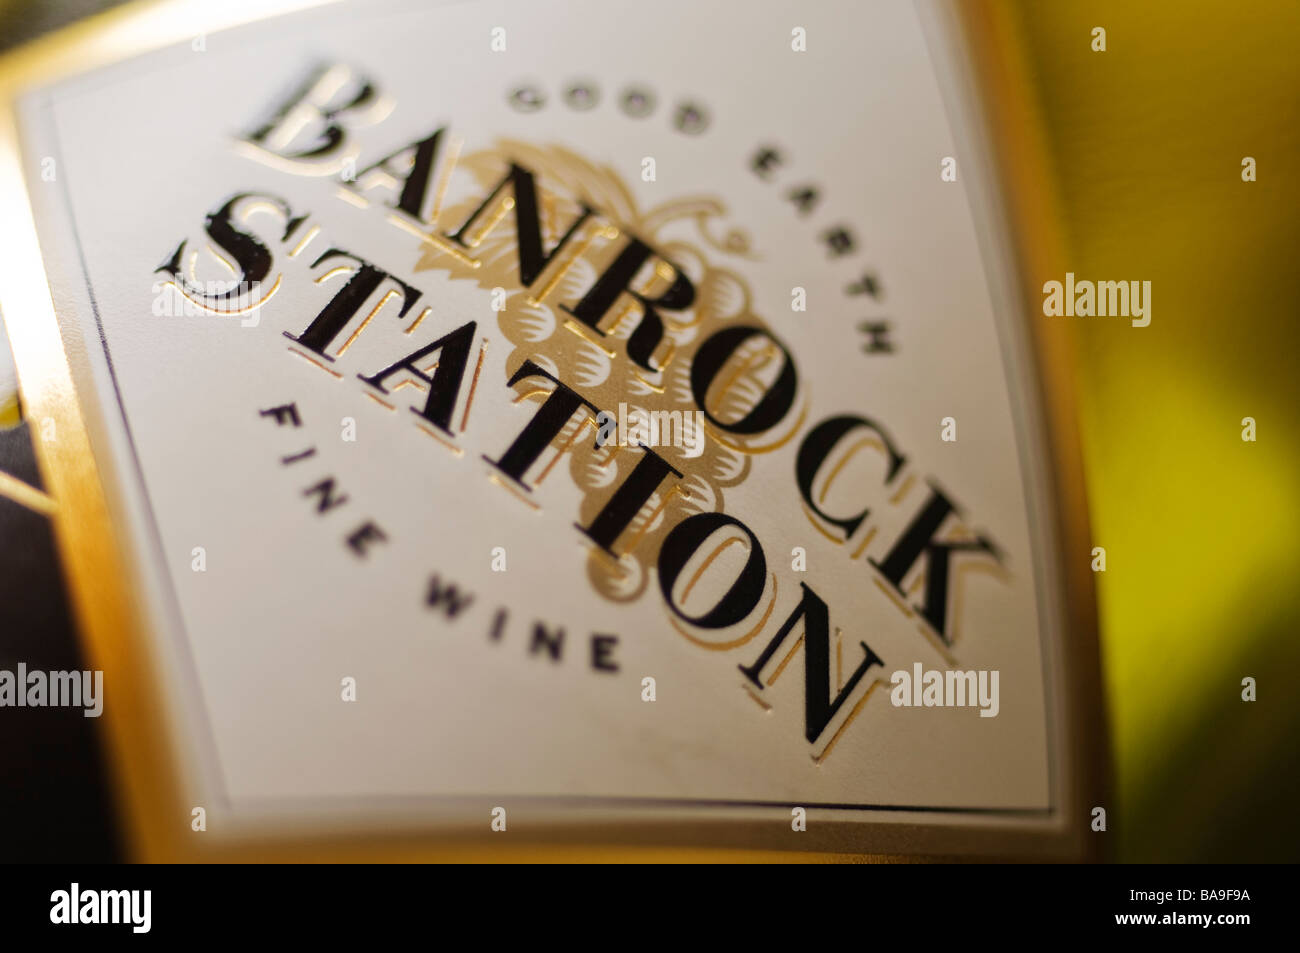 Banrock Station fine wine bottle label closeup Stock Photo